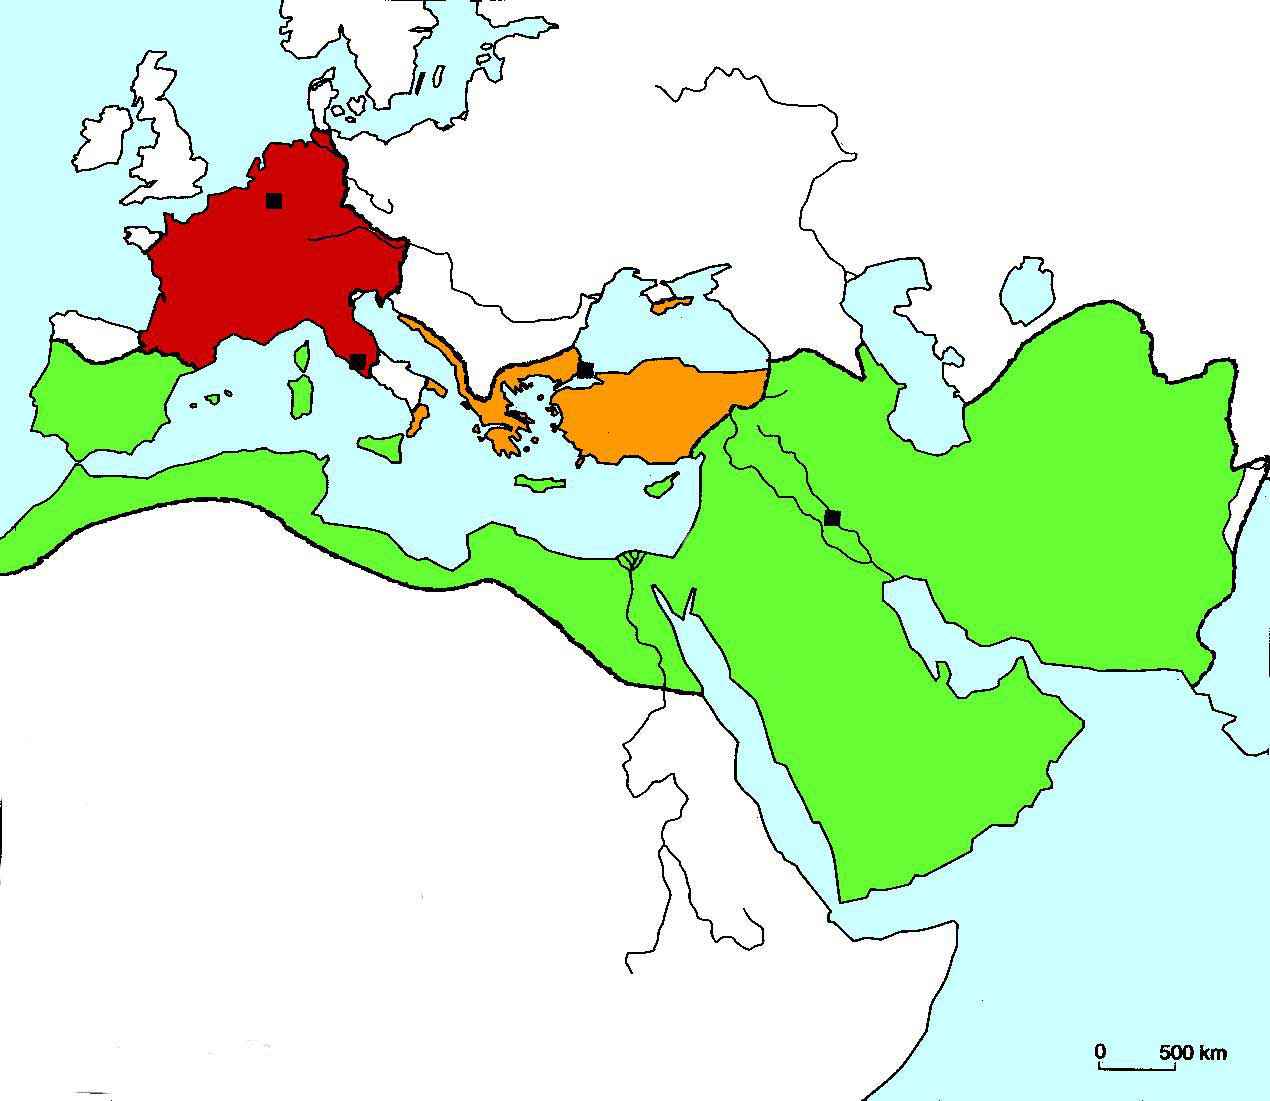 grandes civilisations mediterraneennes